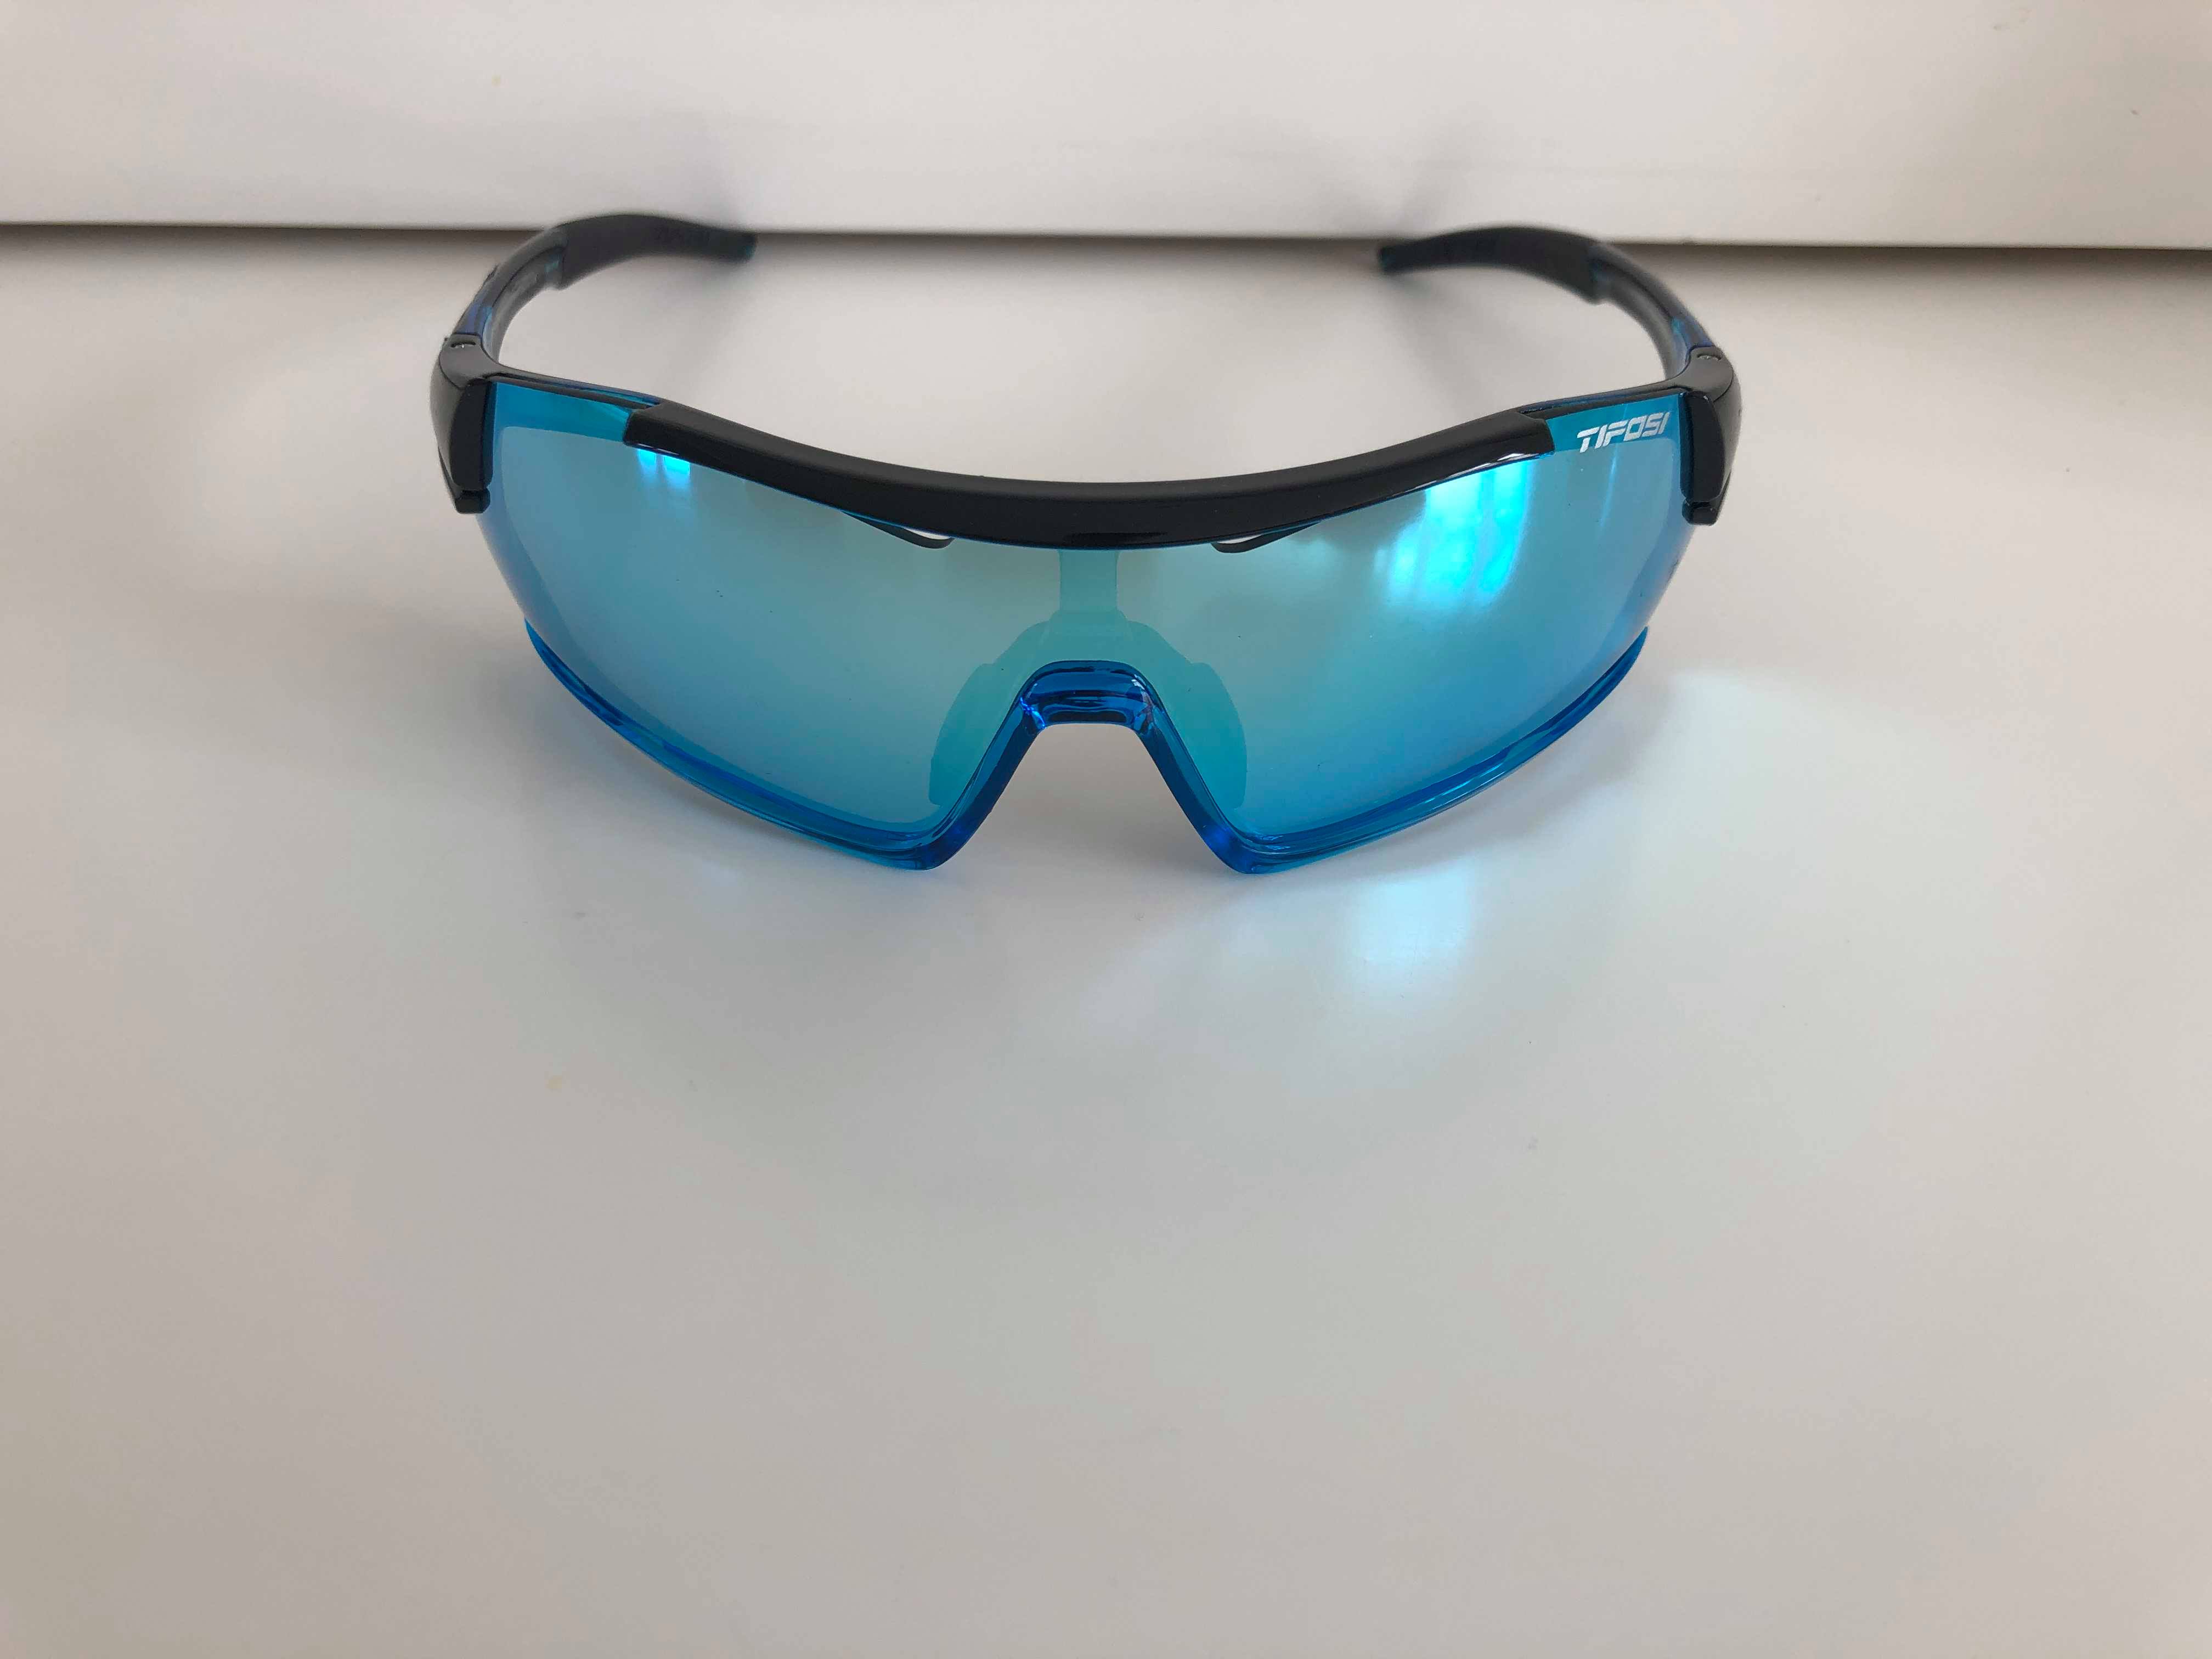 Test: Davos solbriller | CykelStart.dk